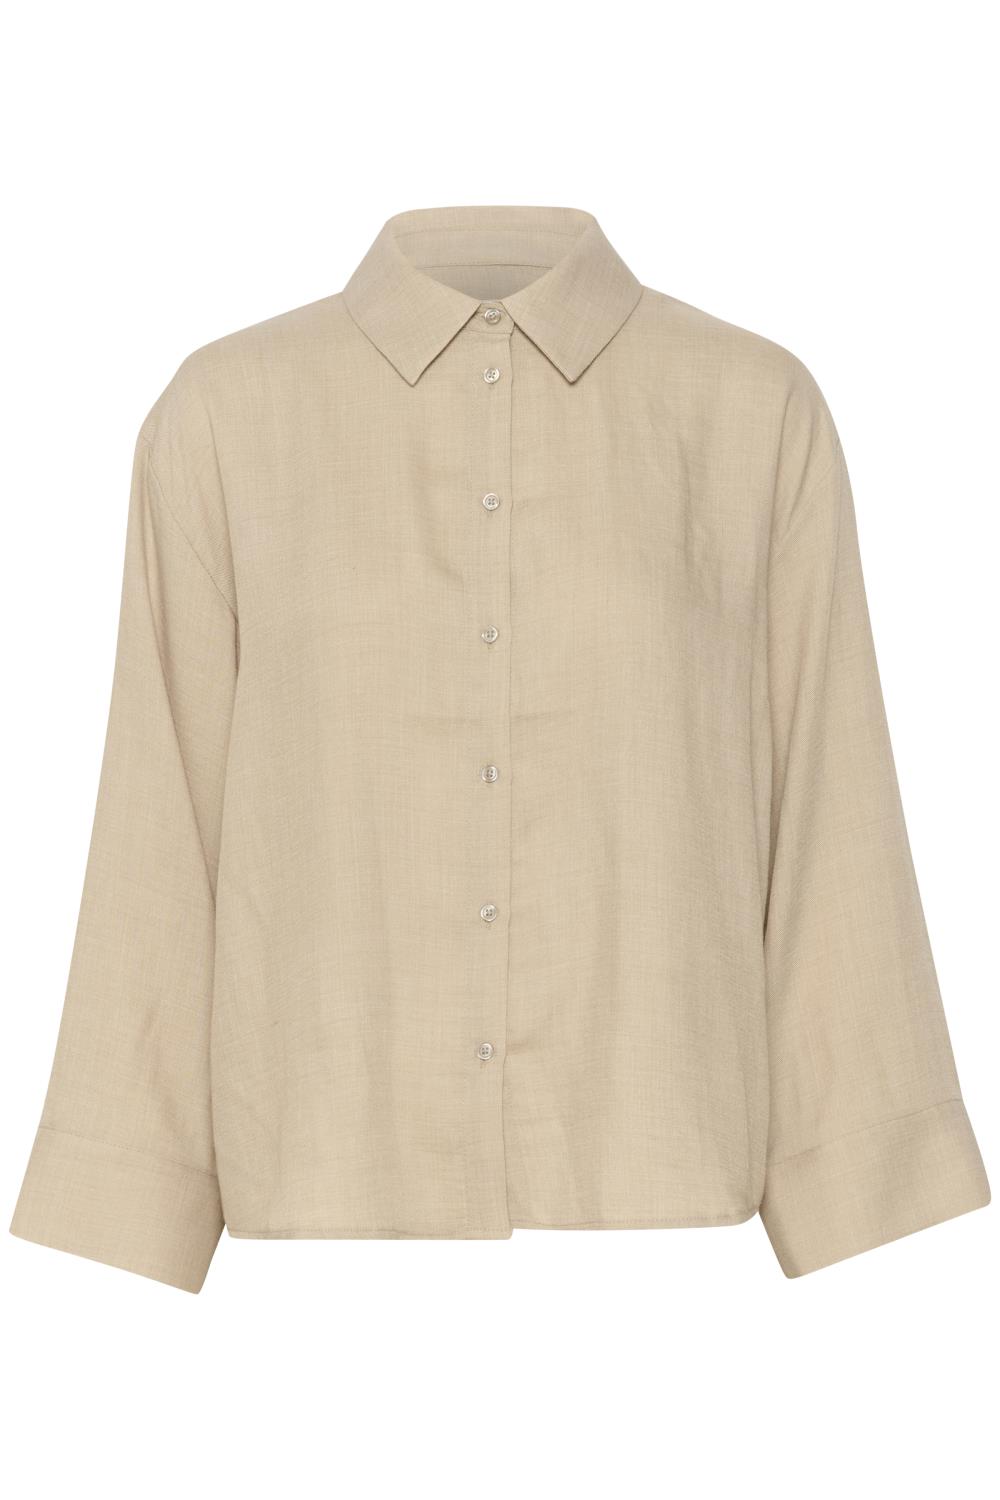 My Essential Wardrobe Silje Alice Shirt, beige